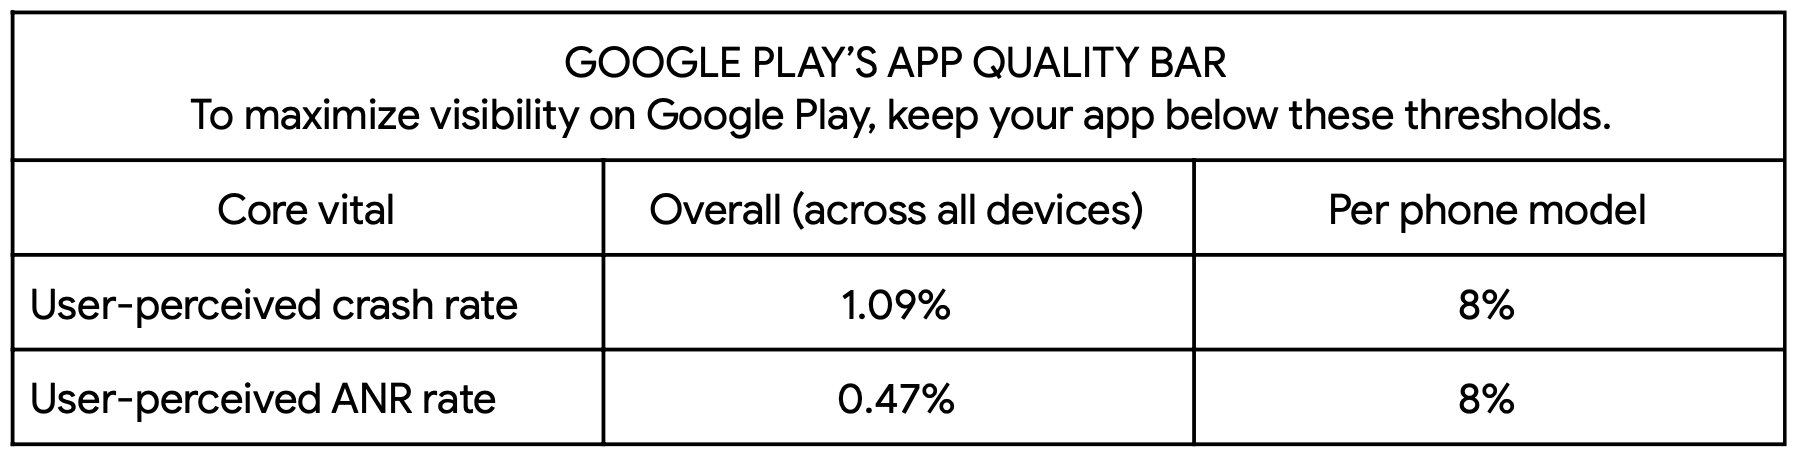 Google Play App Quality Bar